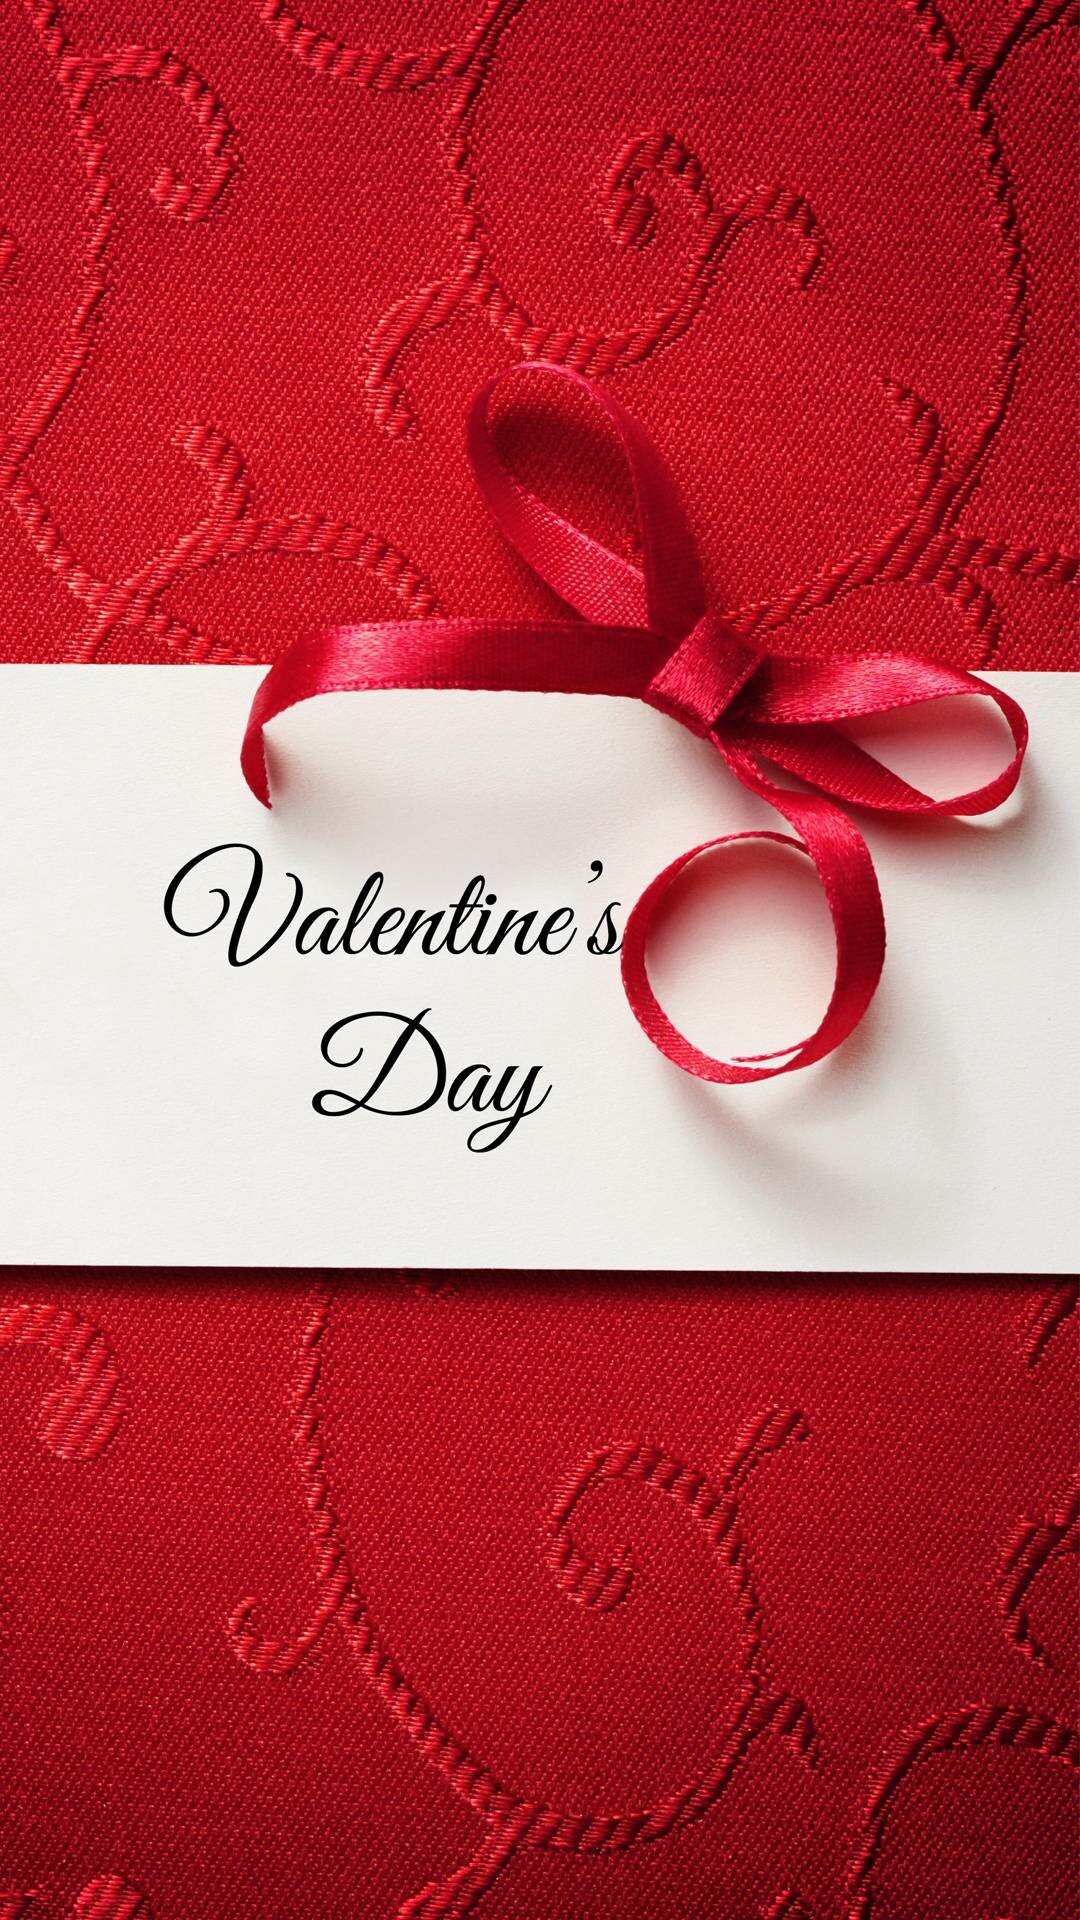 Valentine's Day: Romantic gift-giving, Love celebration. 1080x1920 Full HD Background.